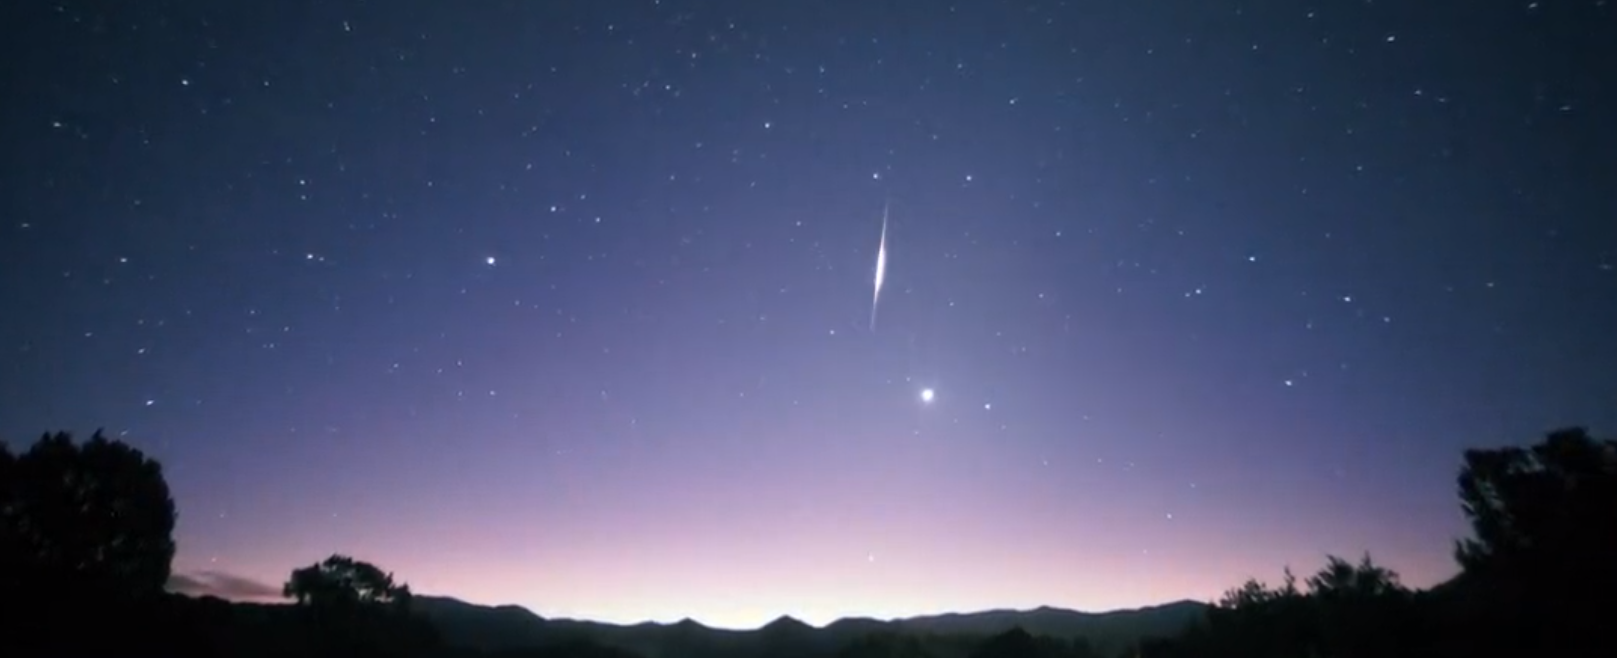 NASA: 5 καλοί λόγοι για να στρέψουμε το βλέμμα στον ουρανό τον Νοέμβριο